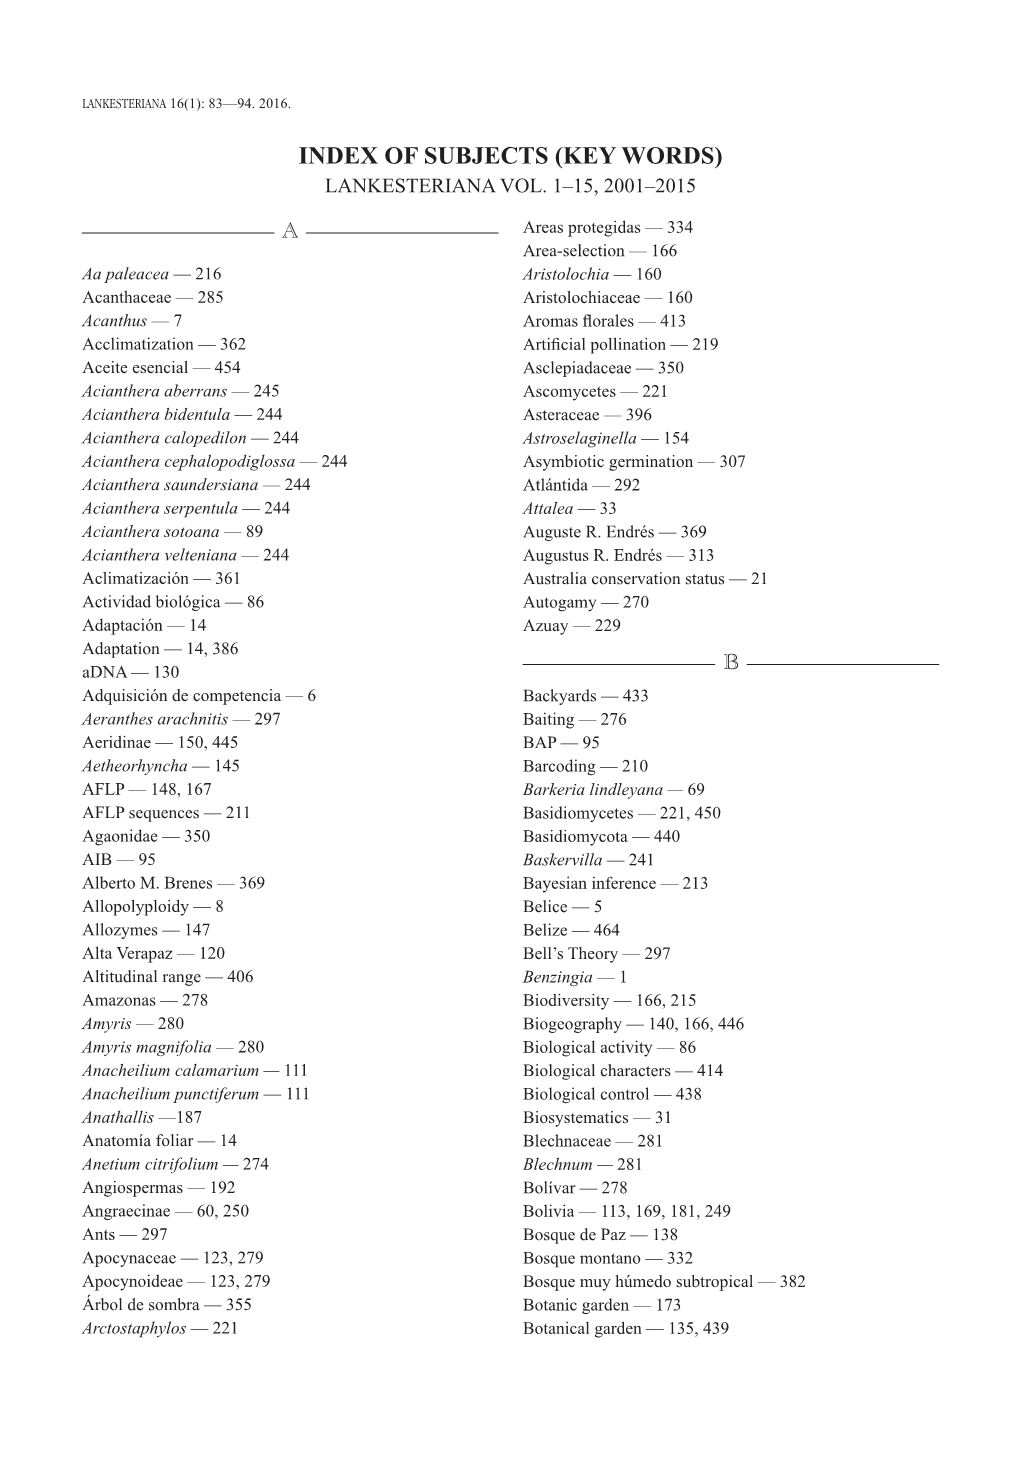 Index of Subjects (Key Words) Lankesteriana Vol